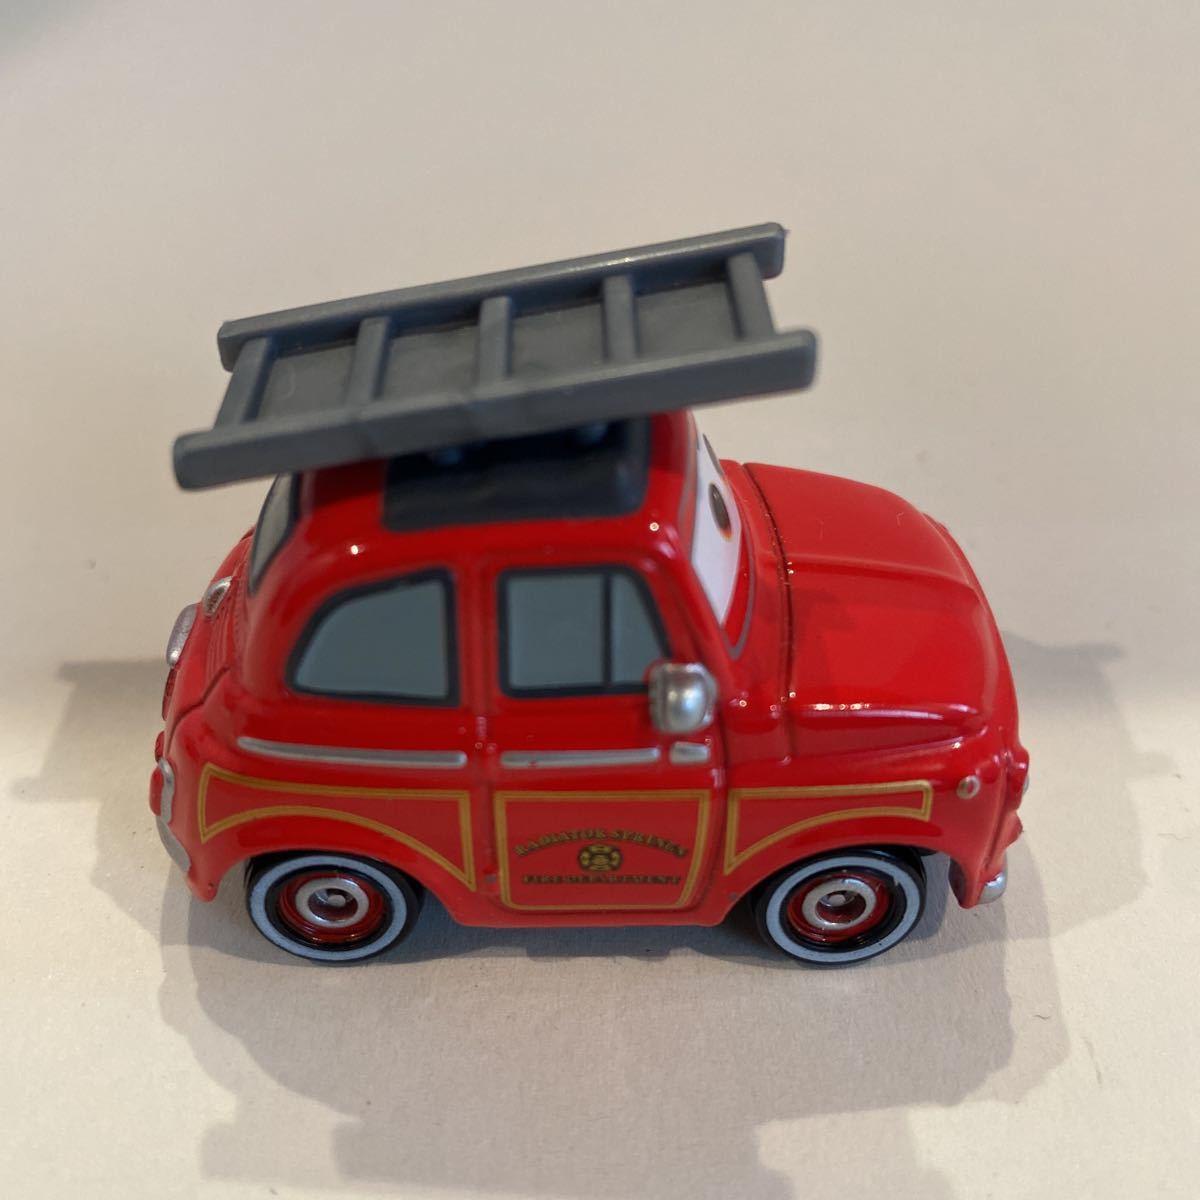  The Cars Tomica Louis ji пожарная машина модель Rescue go-go-